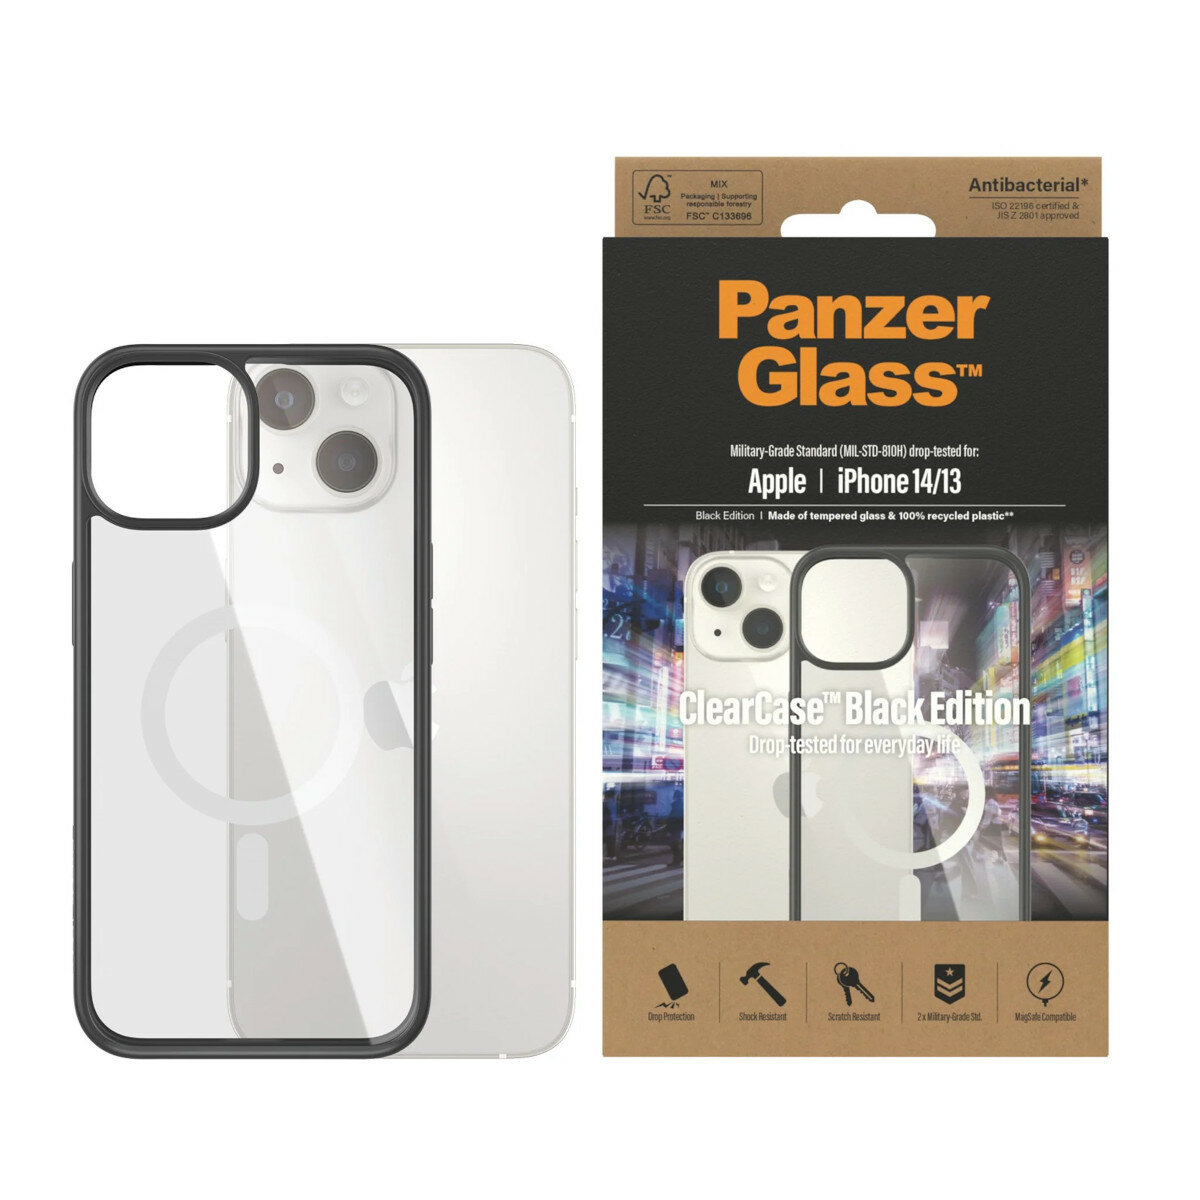 Etui PanzerGlass ClearCase MagSafe do iPhone 14/13 etui od frontu przyłożone do telefonu obok opakowania